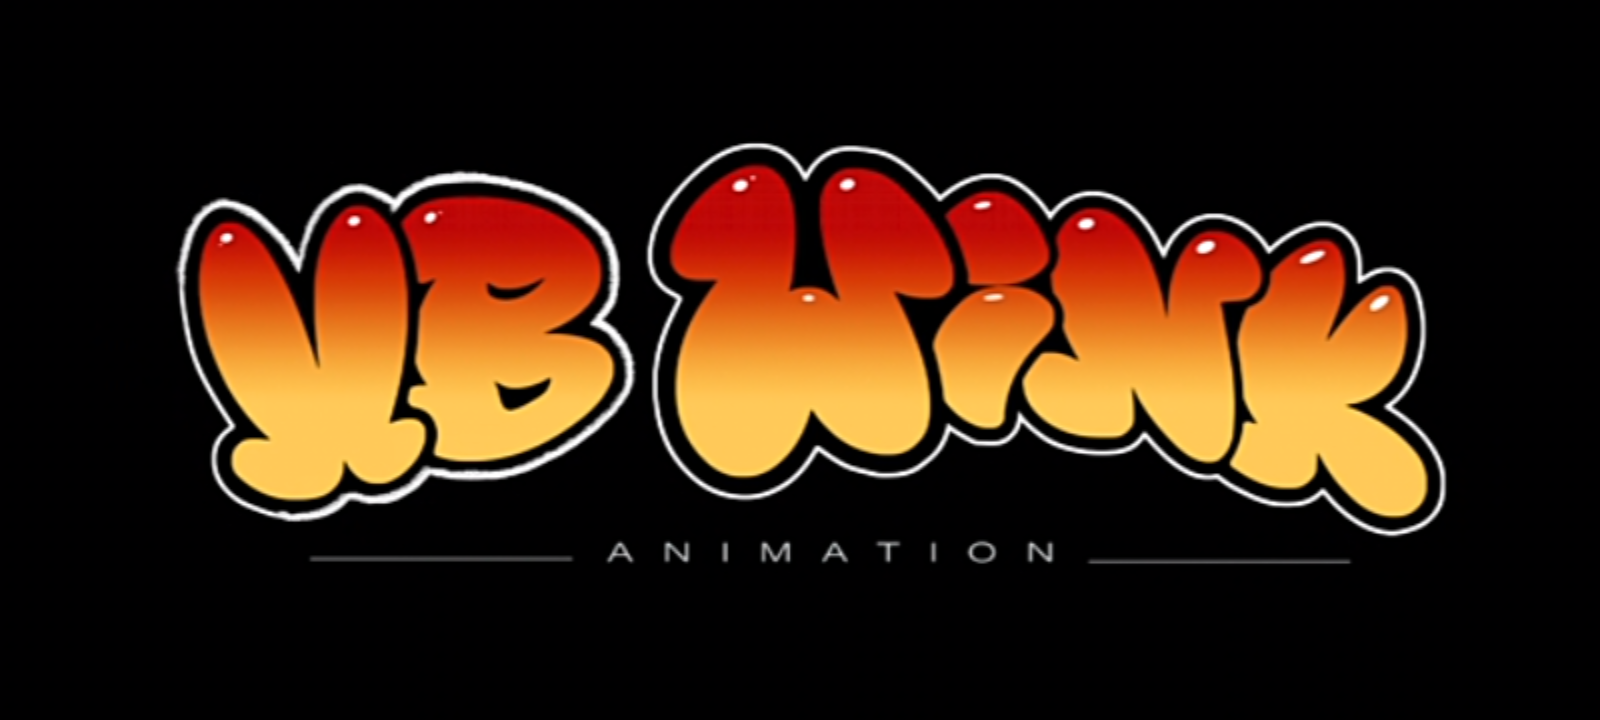 HB Wink Animation Logo